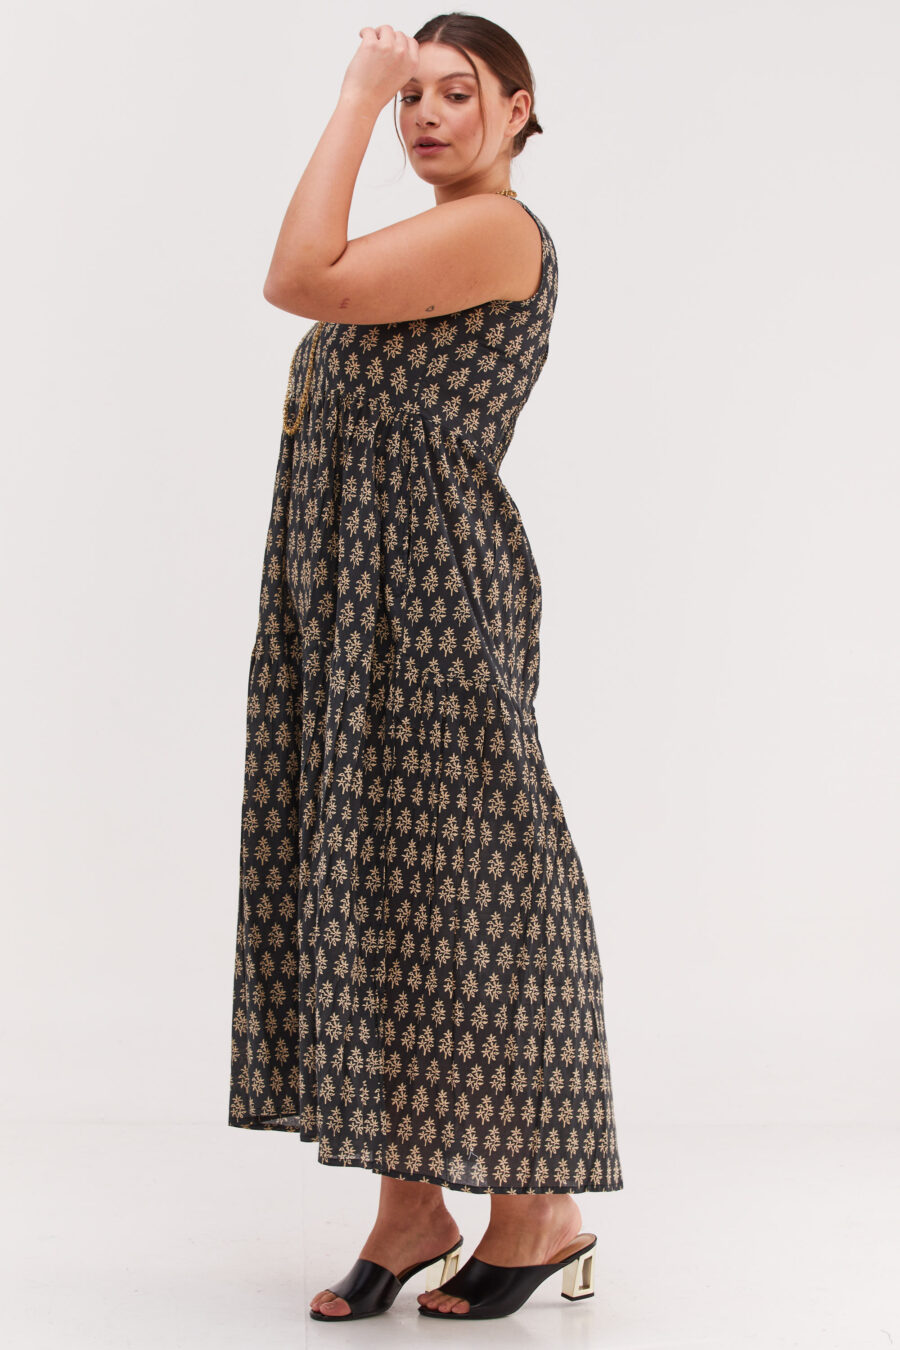 Lizi dress | Uniquely designed dress – Tokio print, black dress with cream colored oriental print. by comfort zone boutique.